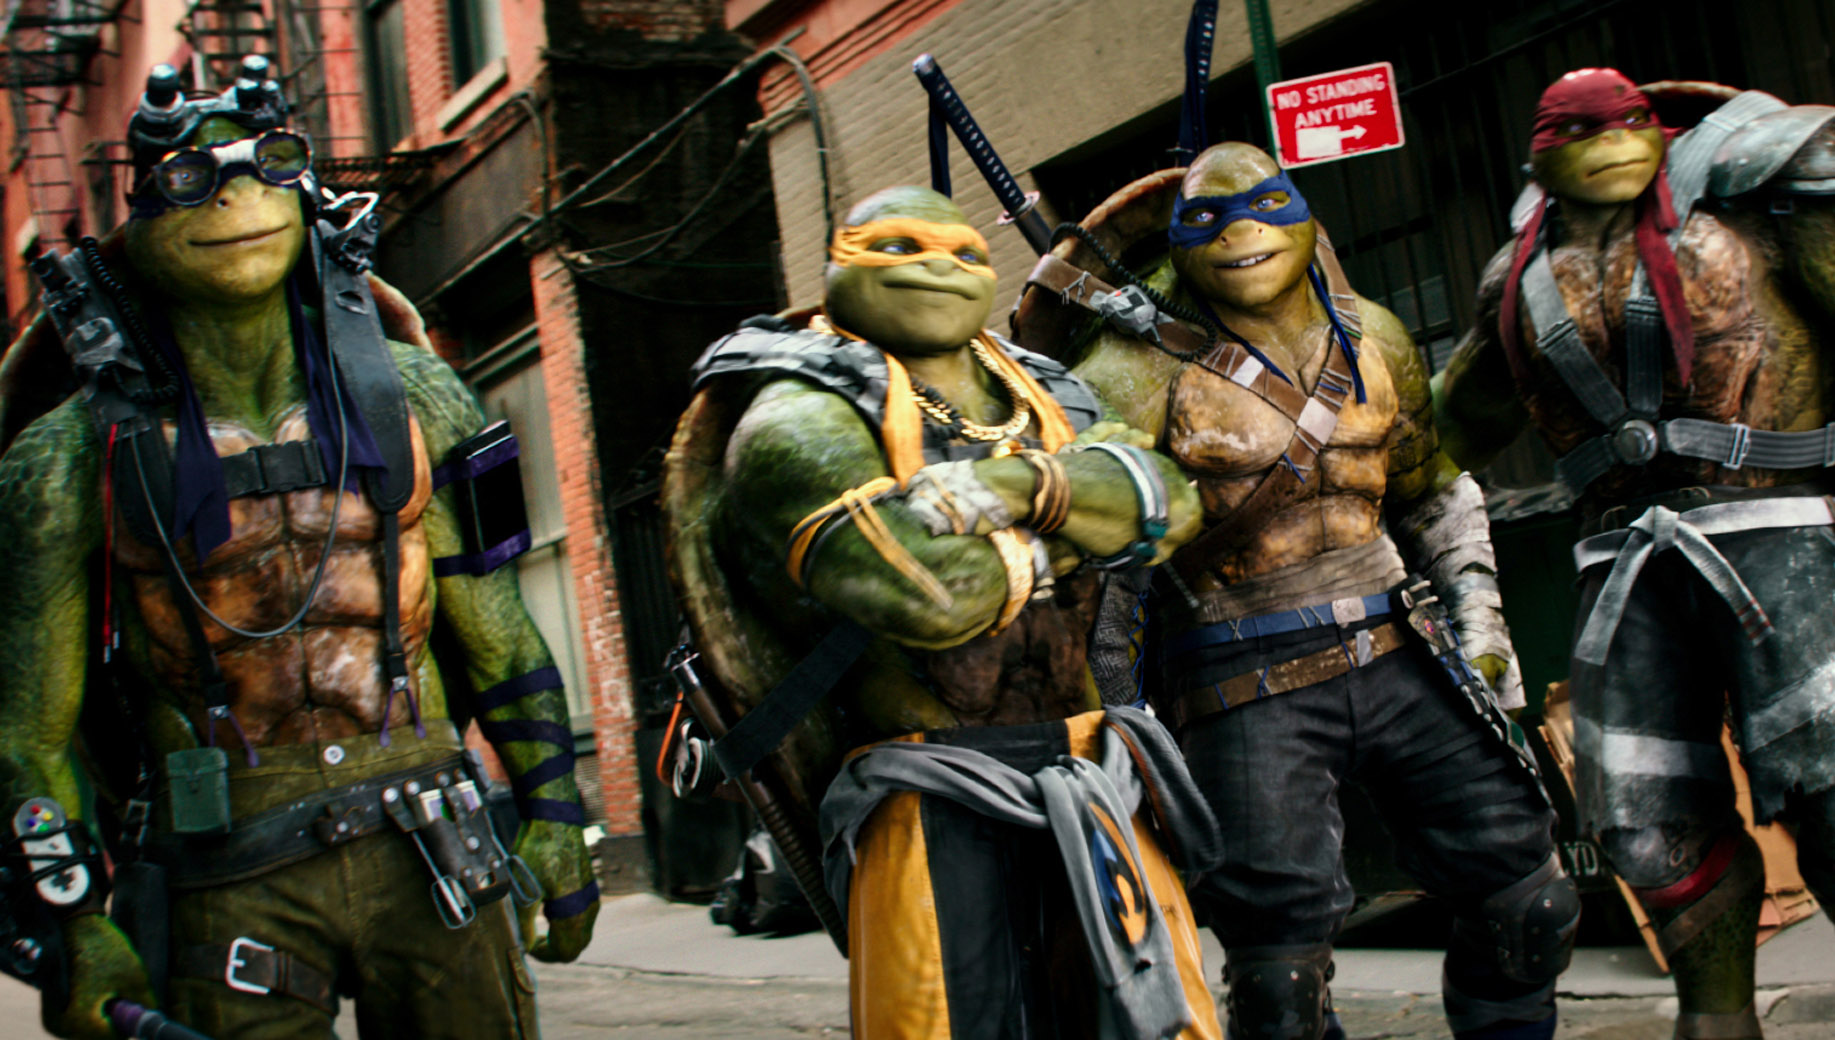 Bring back the Jim Henson garb! New CGI Ninja Turtles lack soul